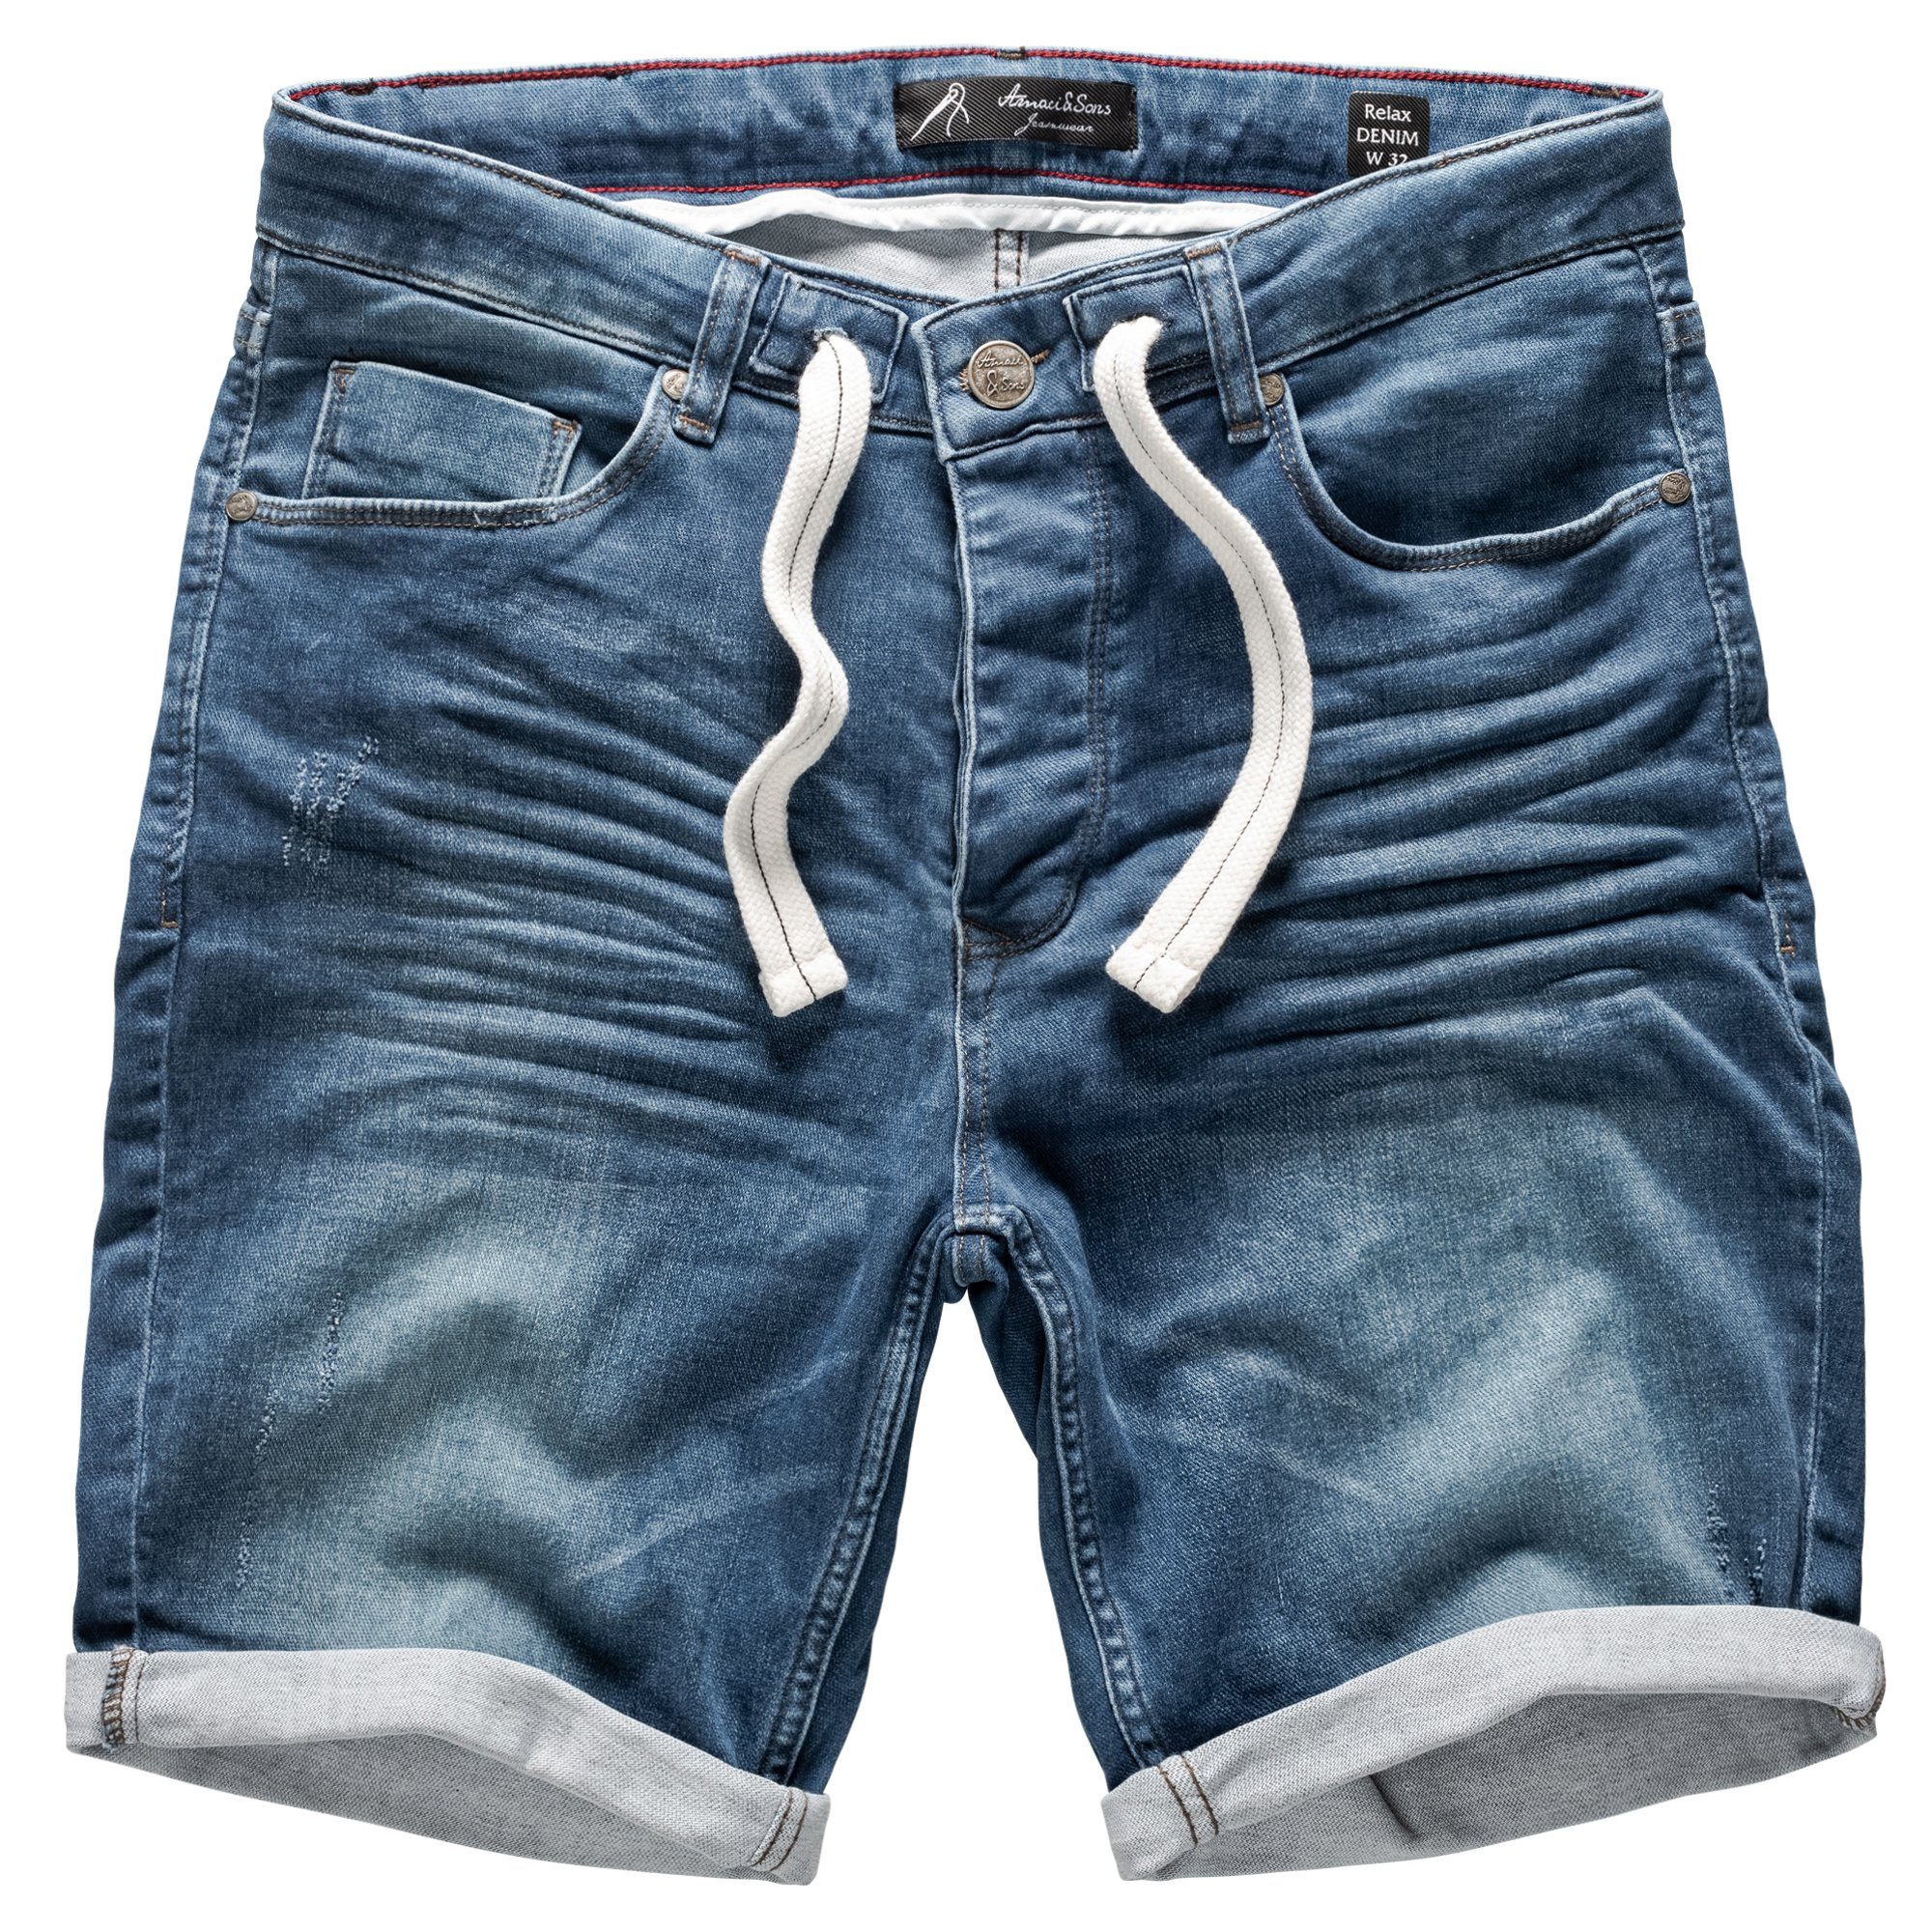 Amaci&Sons Jeansshorts SAN JOSE Destroyed Jeans Shorts